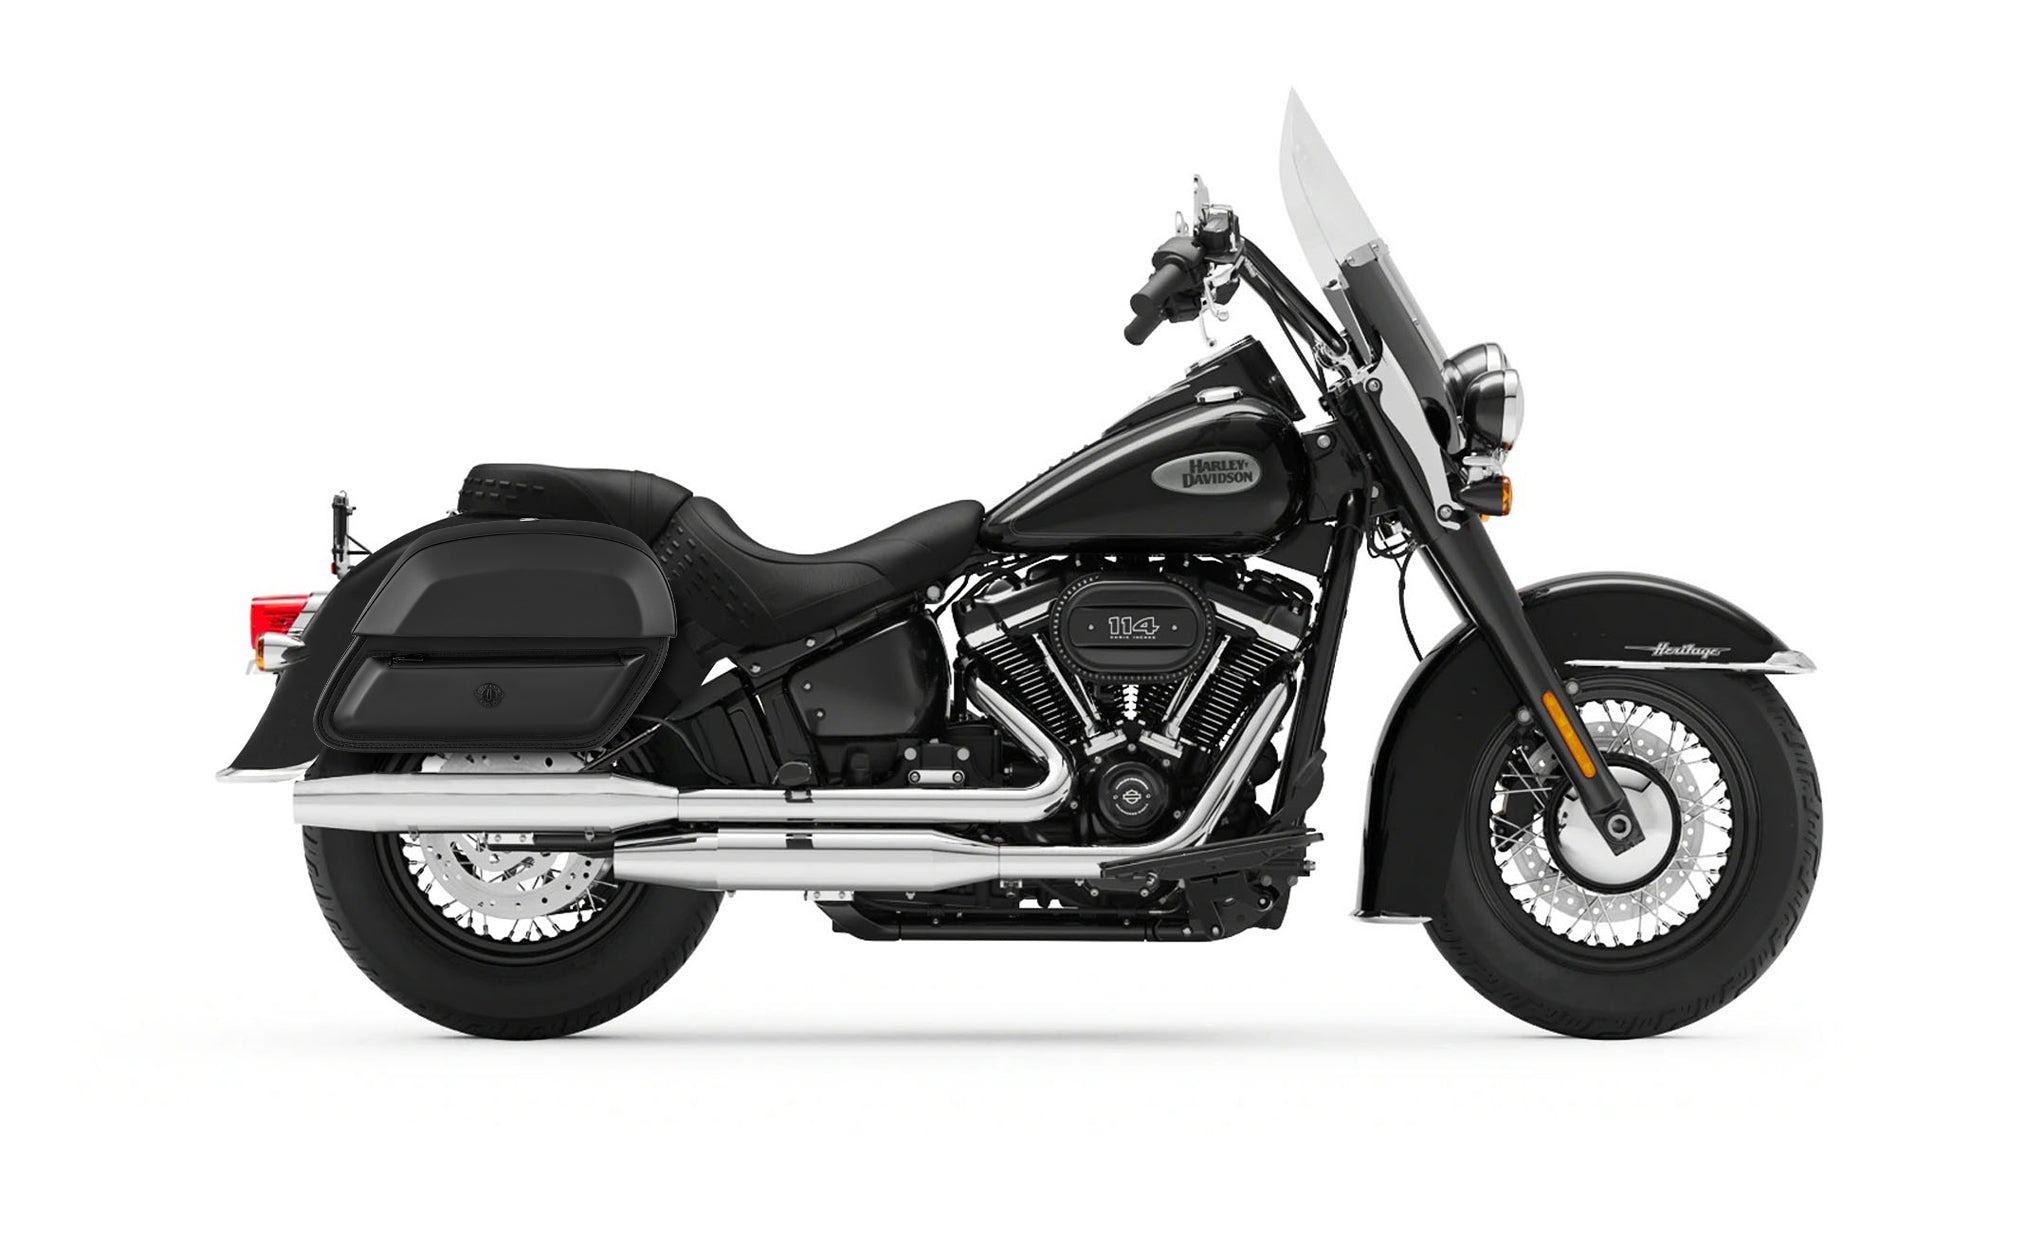 28L - Wraith Medium Leather Saddlebags for Harley Softail Heritage FLSTC/I BAG on Bike View @expand